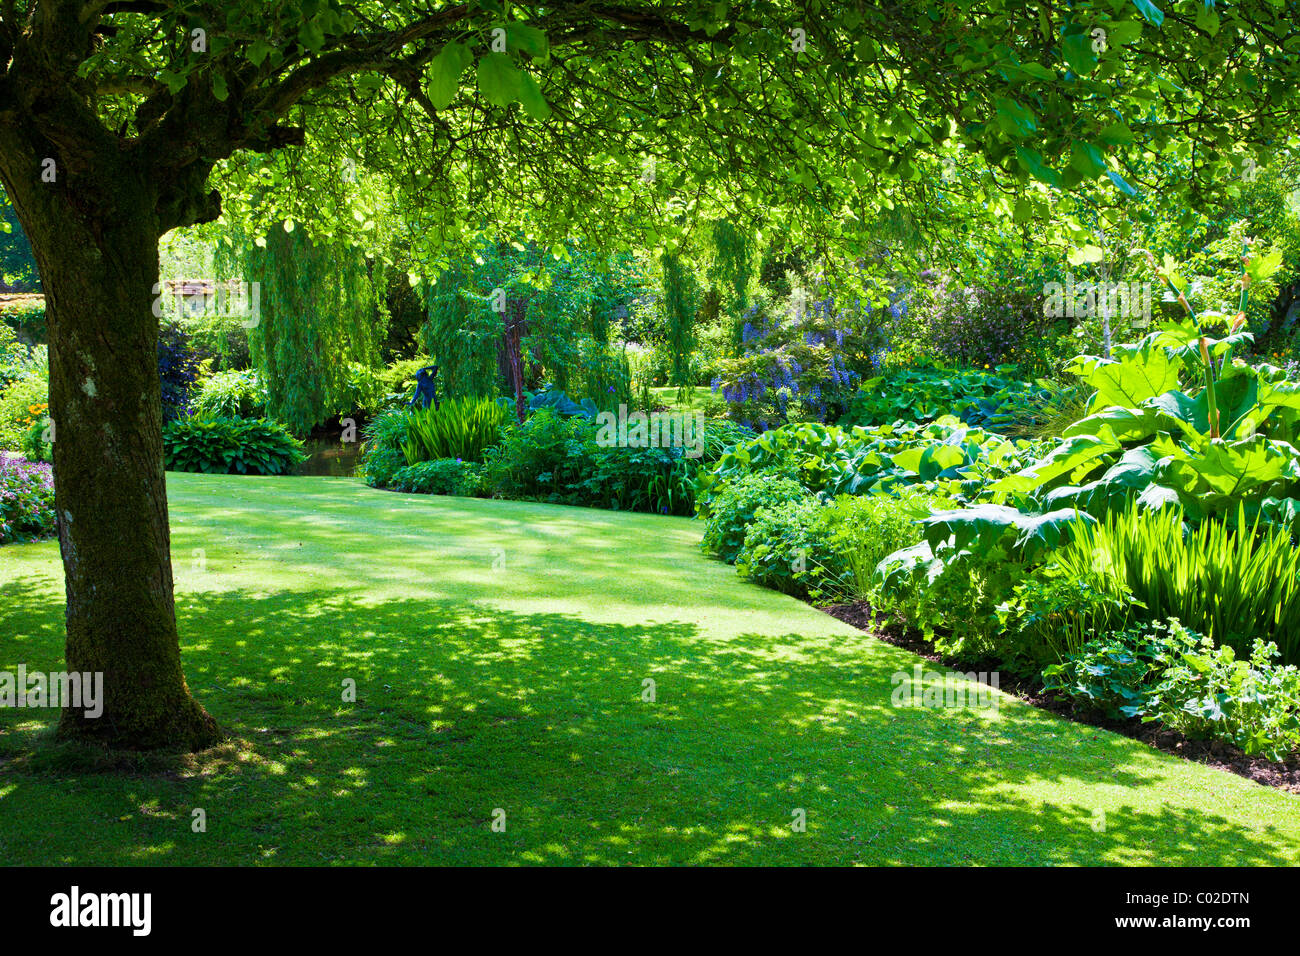 A shady corner beneath a tree near the banks of an ornamental garden pond in an English country garden Stock Photo